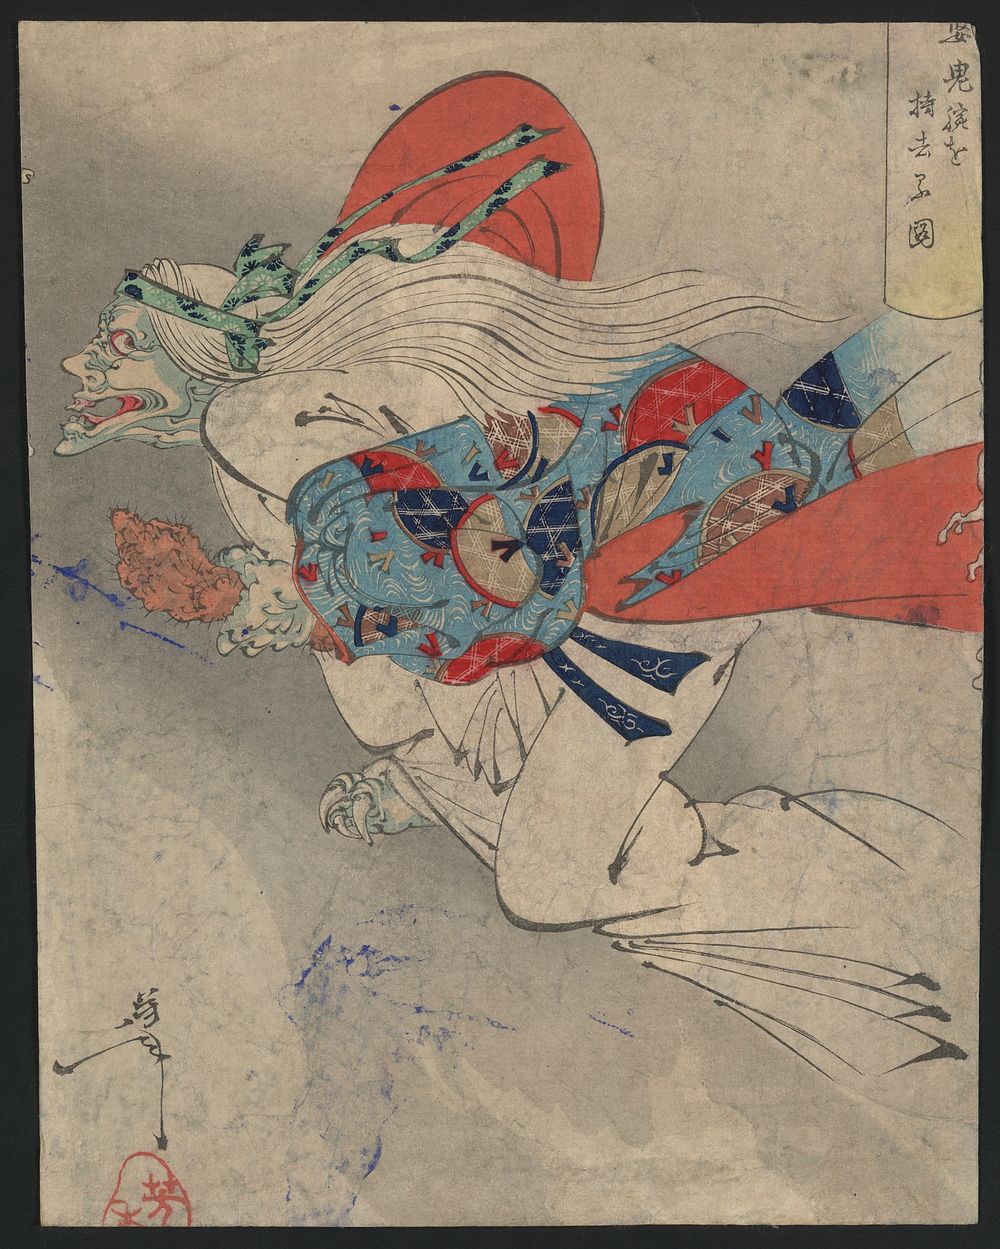 Ibaraki. Original from the Library of Congress.